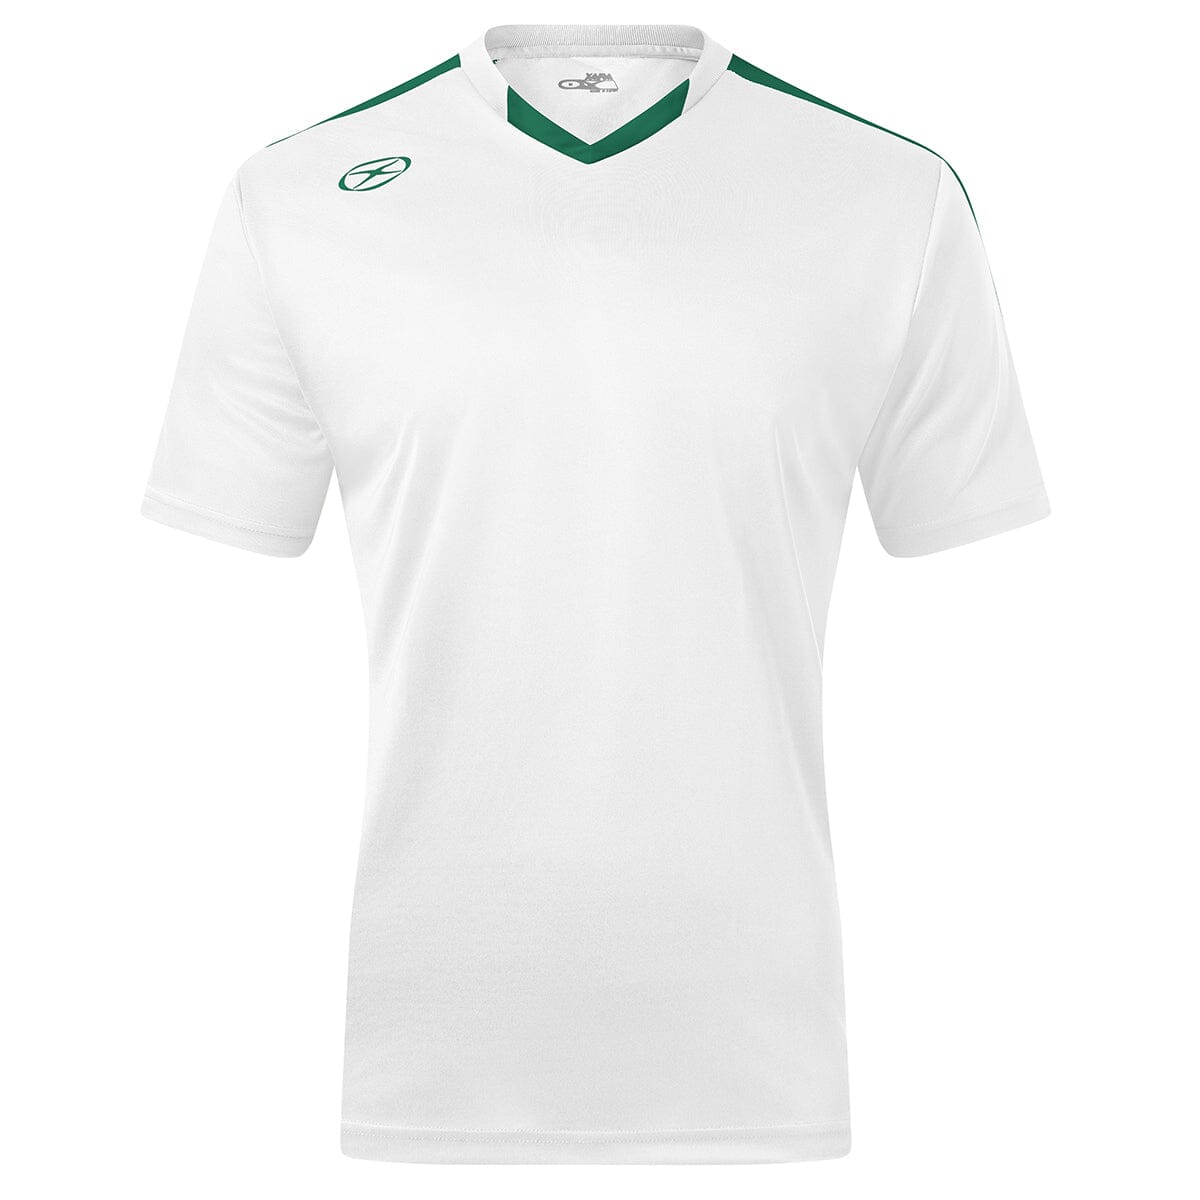 Britannia Jersey - Away Colors - Male Shirt Xara Soccer White/Hunter Youth Medium 